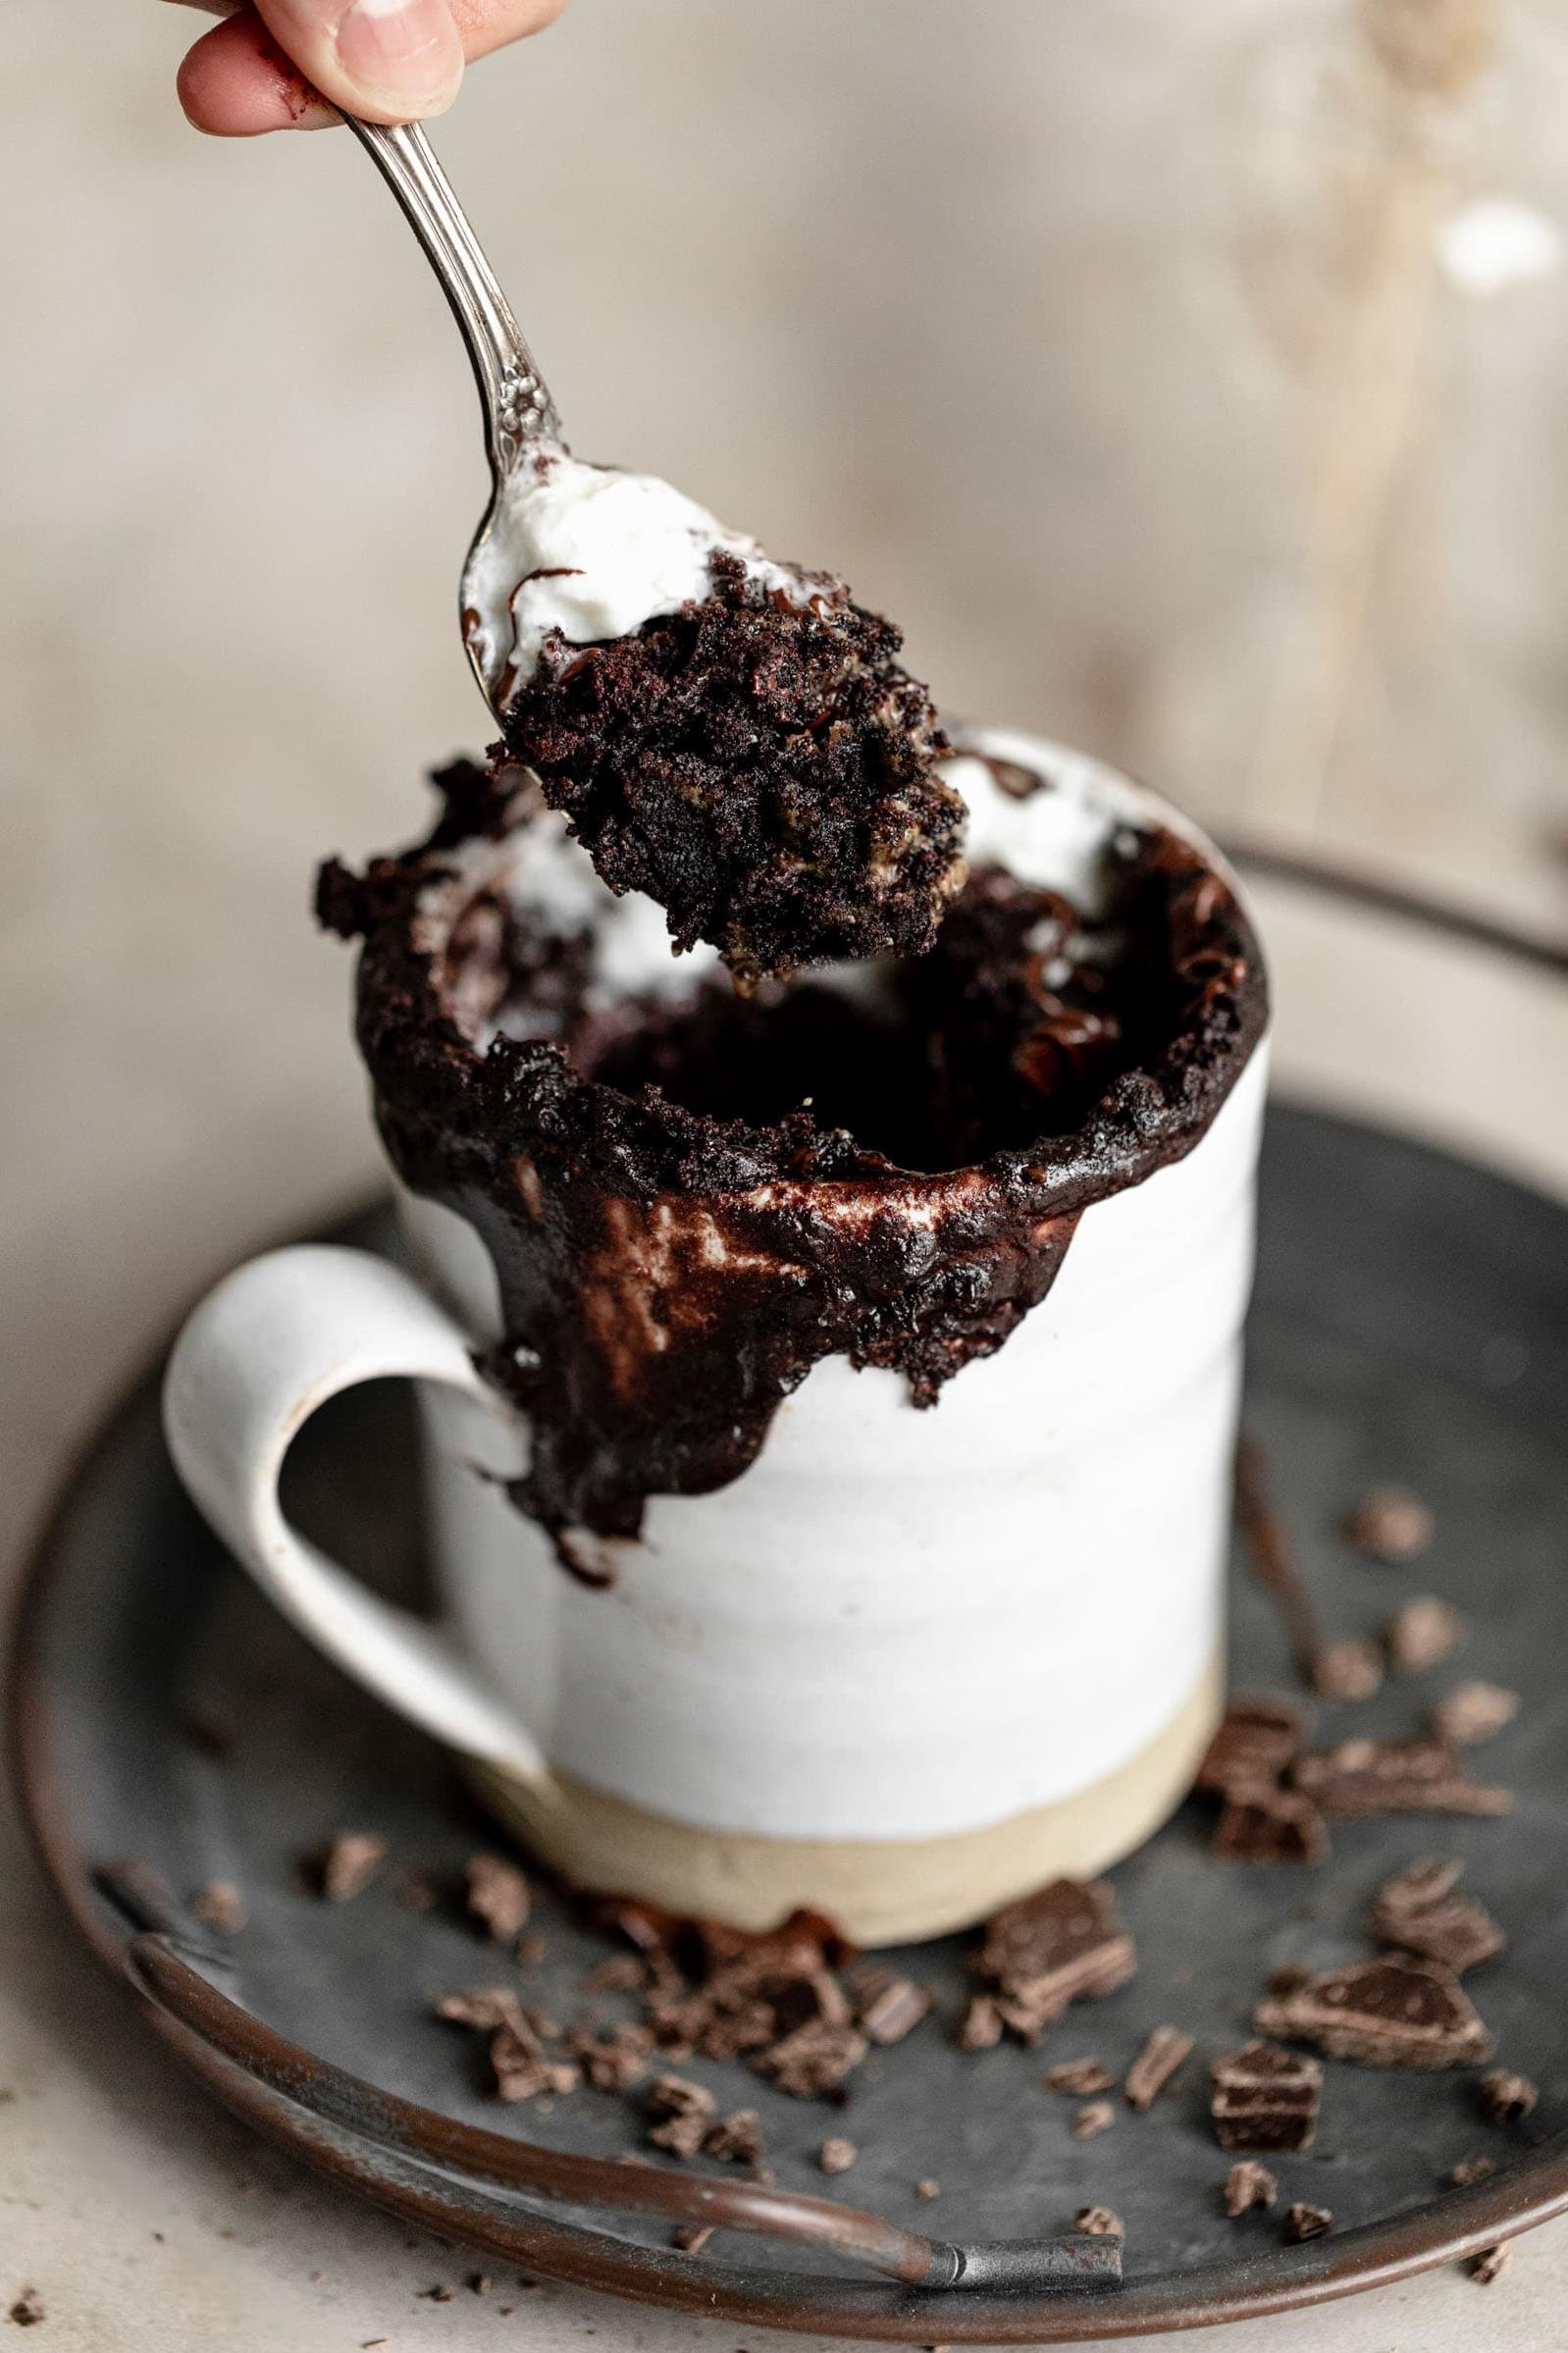  Enjoy a warm, moist chocolate cake anytime, anywhere